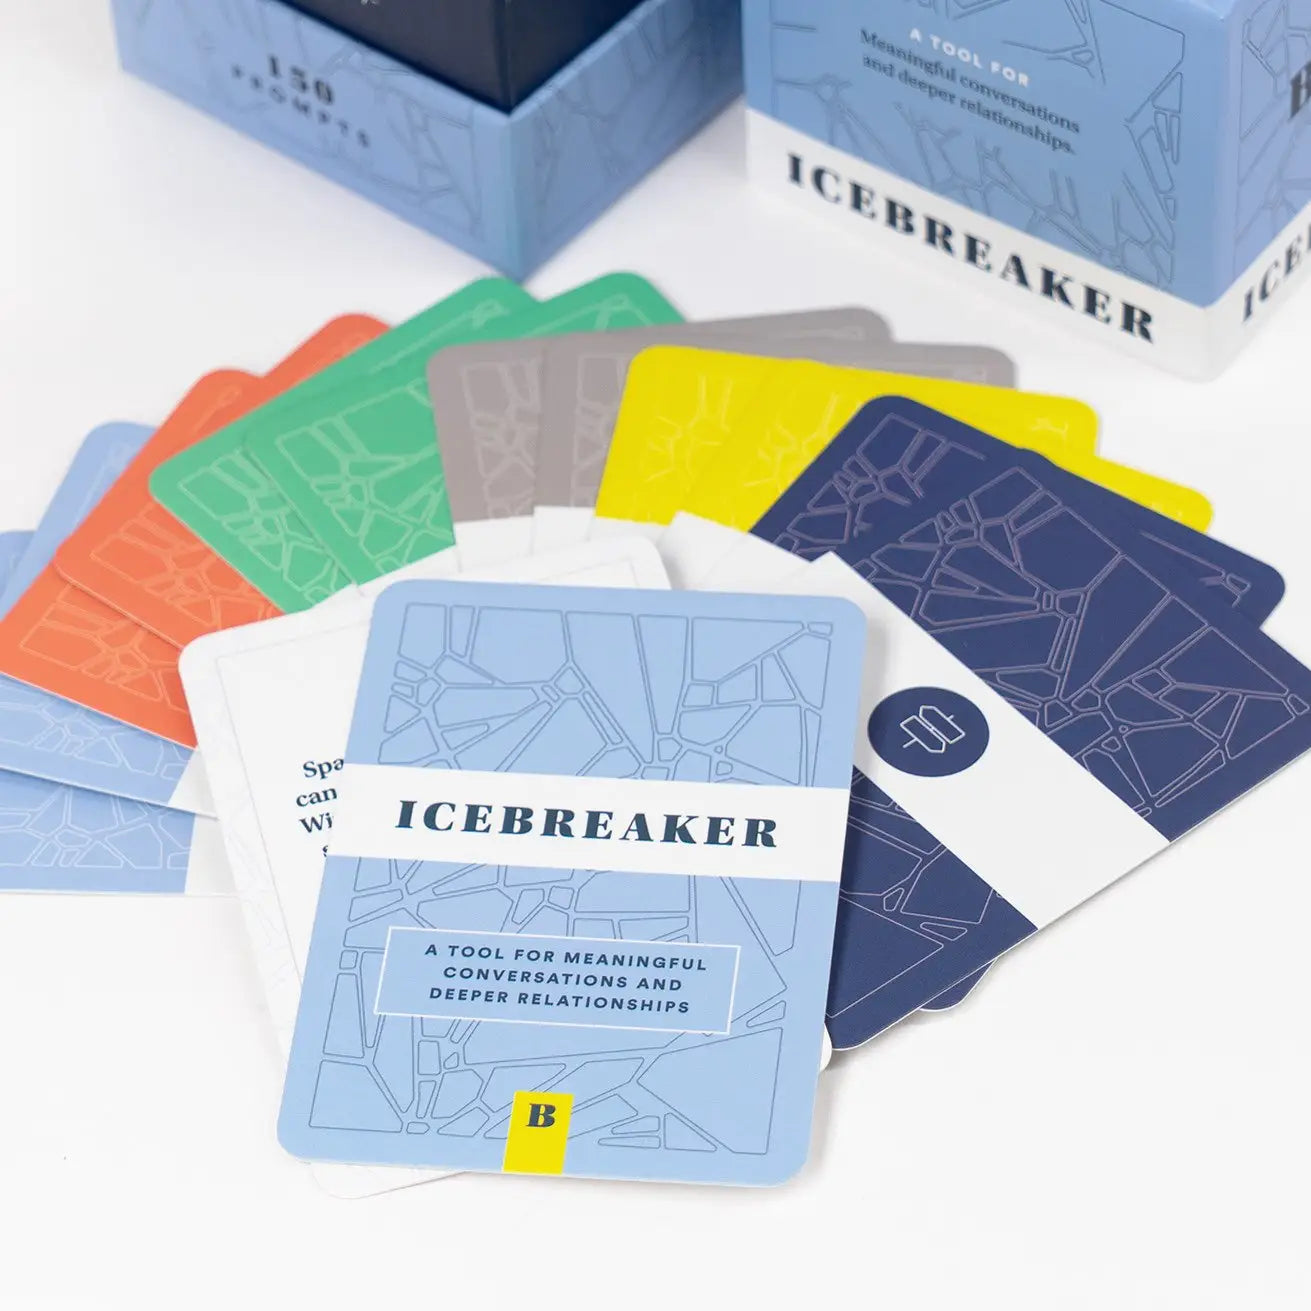 Icebreaker Deck Card Game